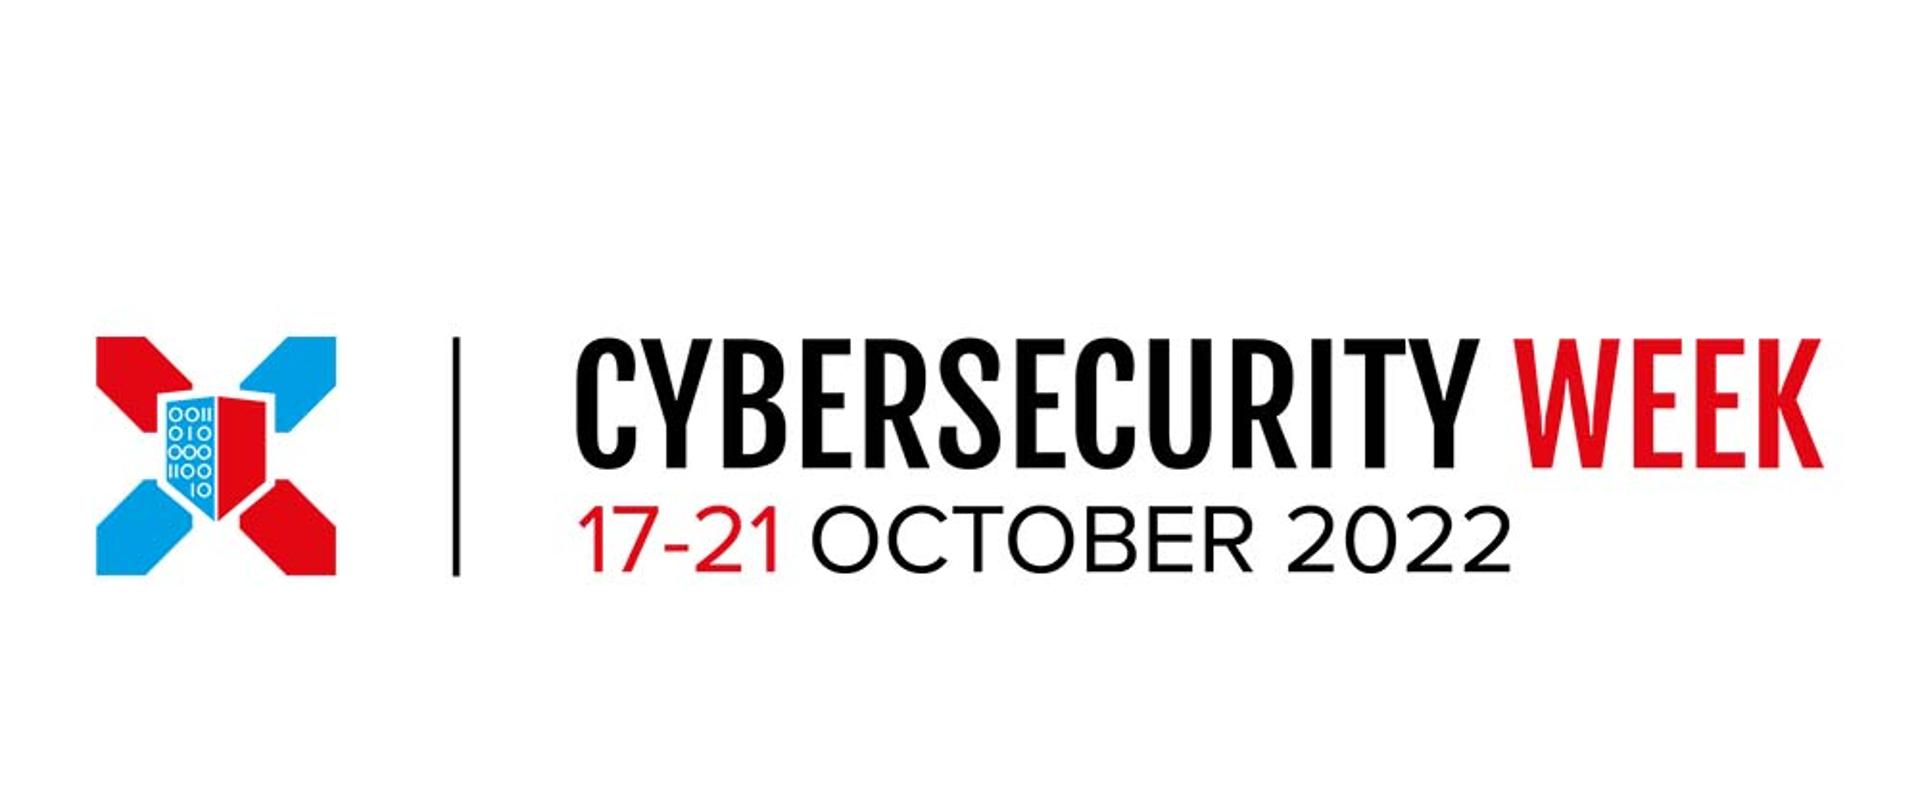 Cybersecurity week 17-21 OCTOBER 2022